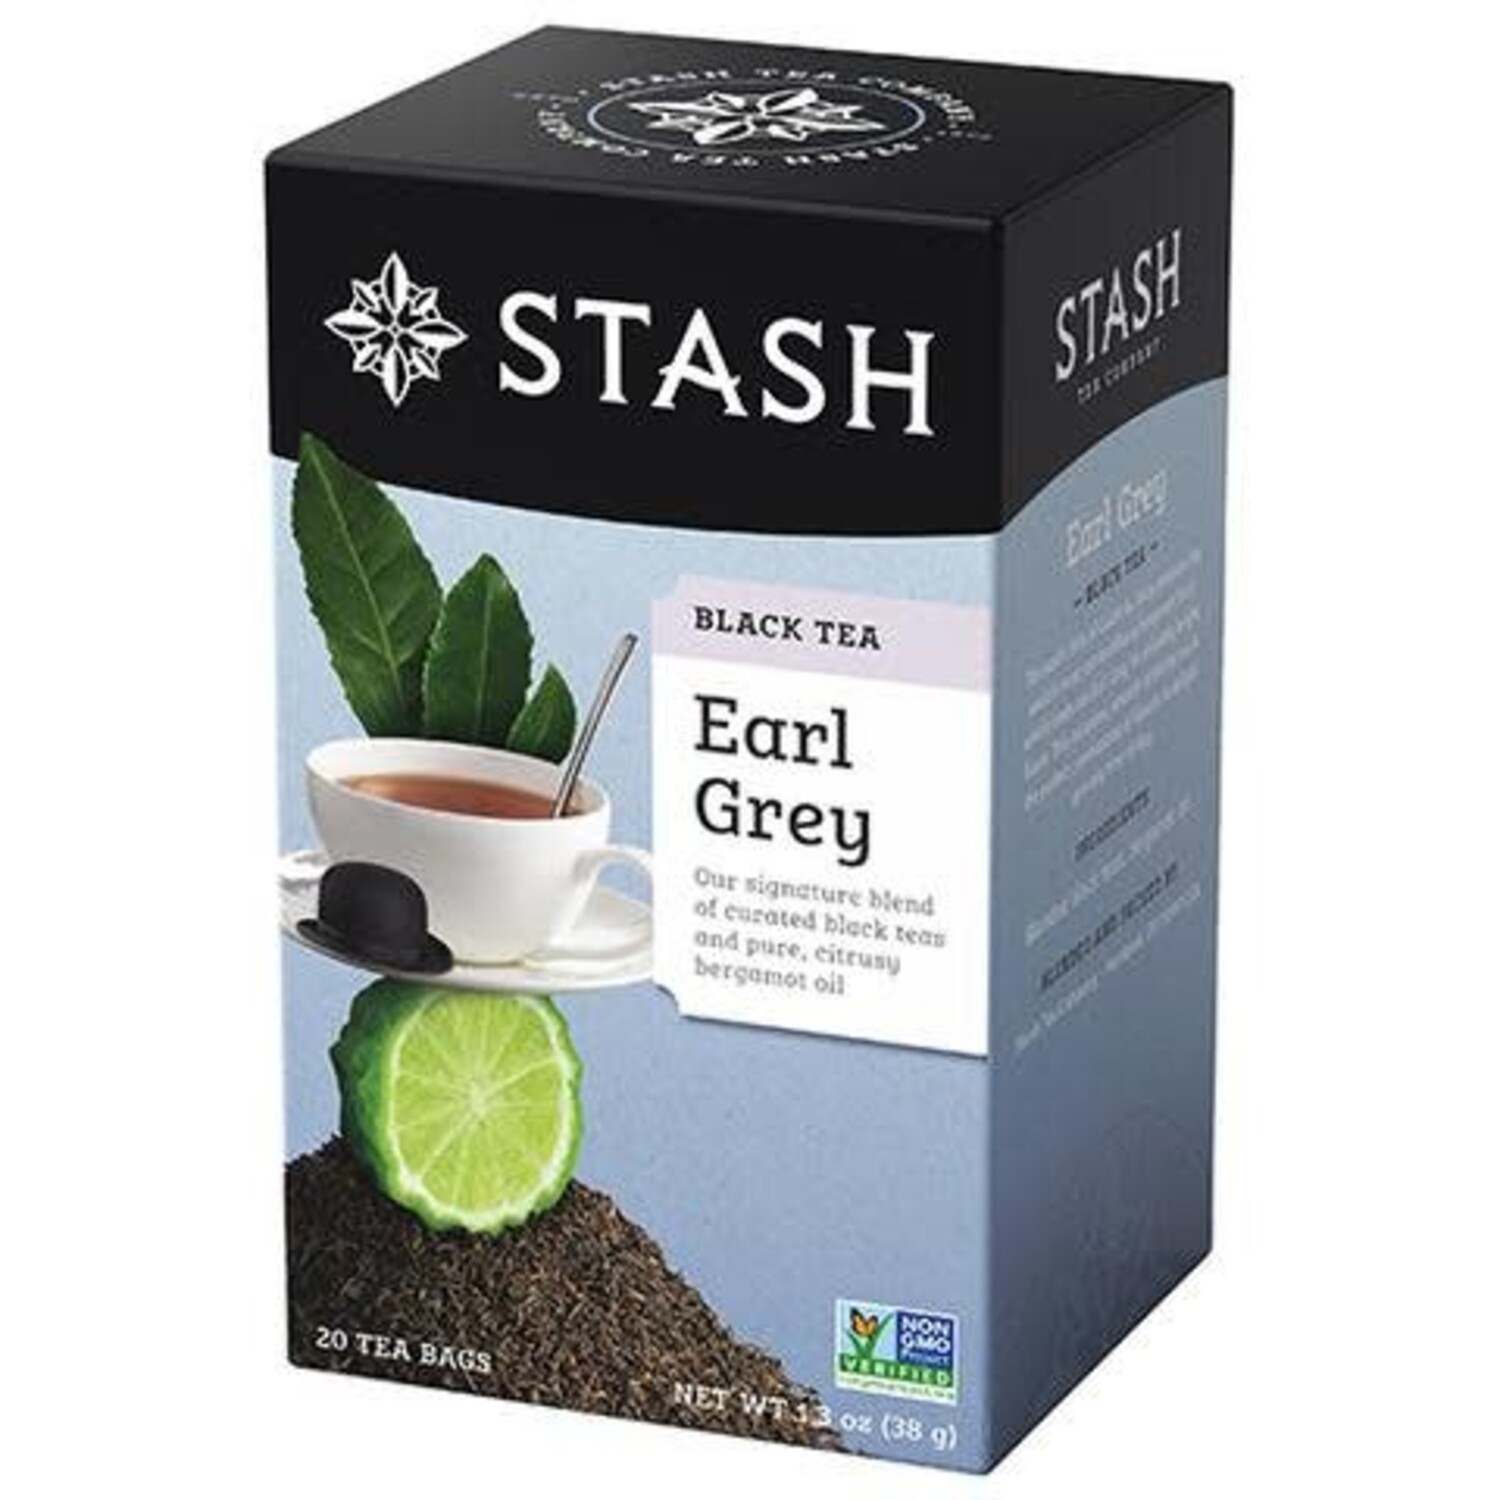 Stash Earl Grey Tea Box - Peters Gourmet Market